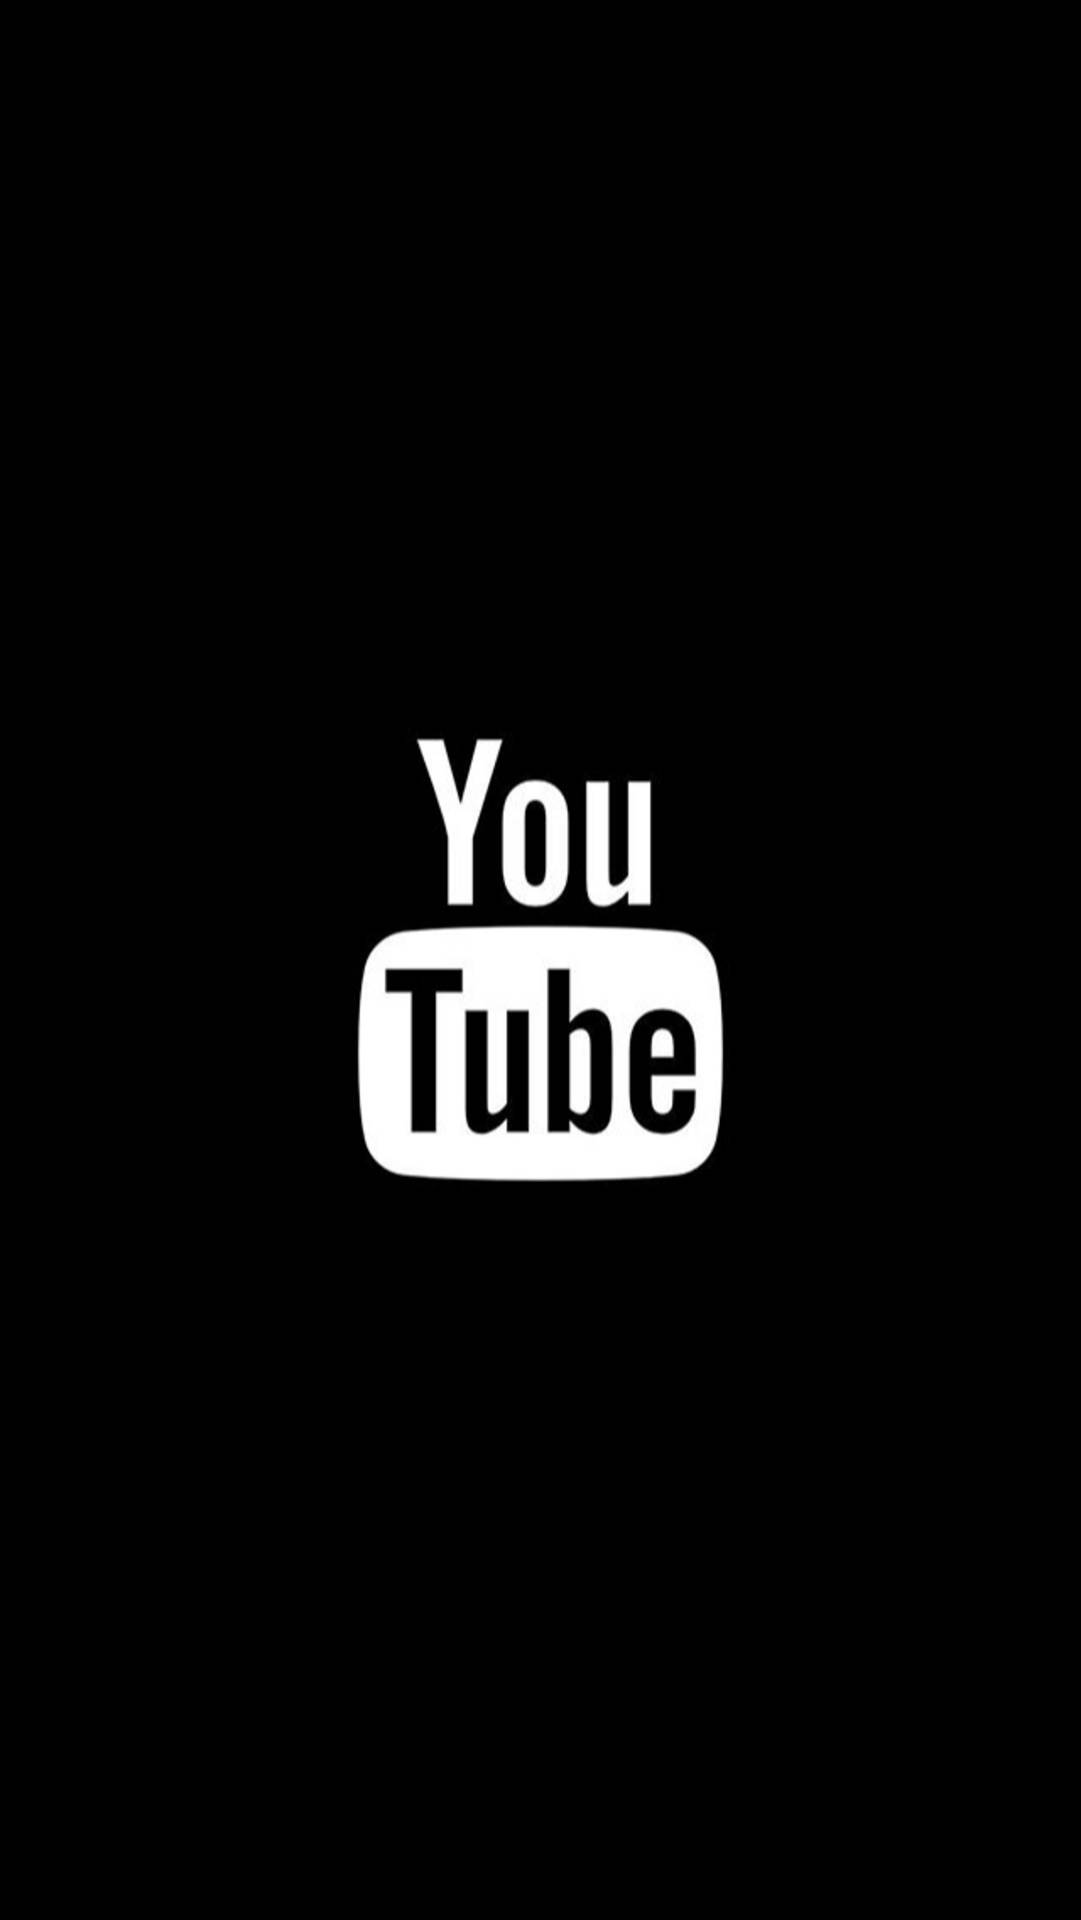 Black And White YouTube Logo Wallpaper